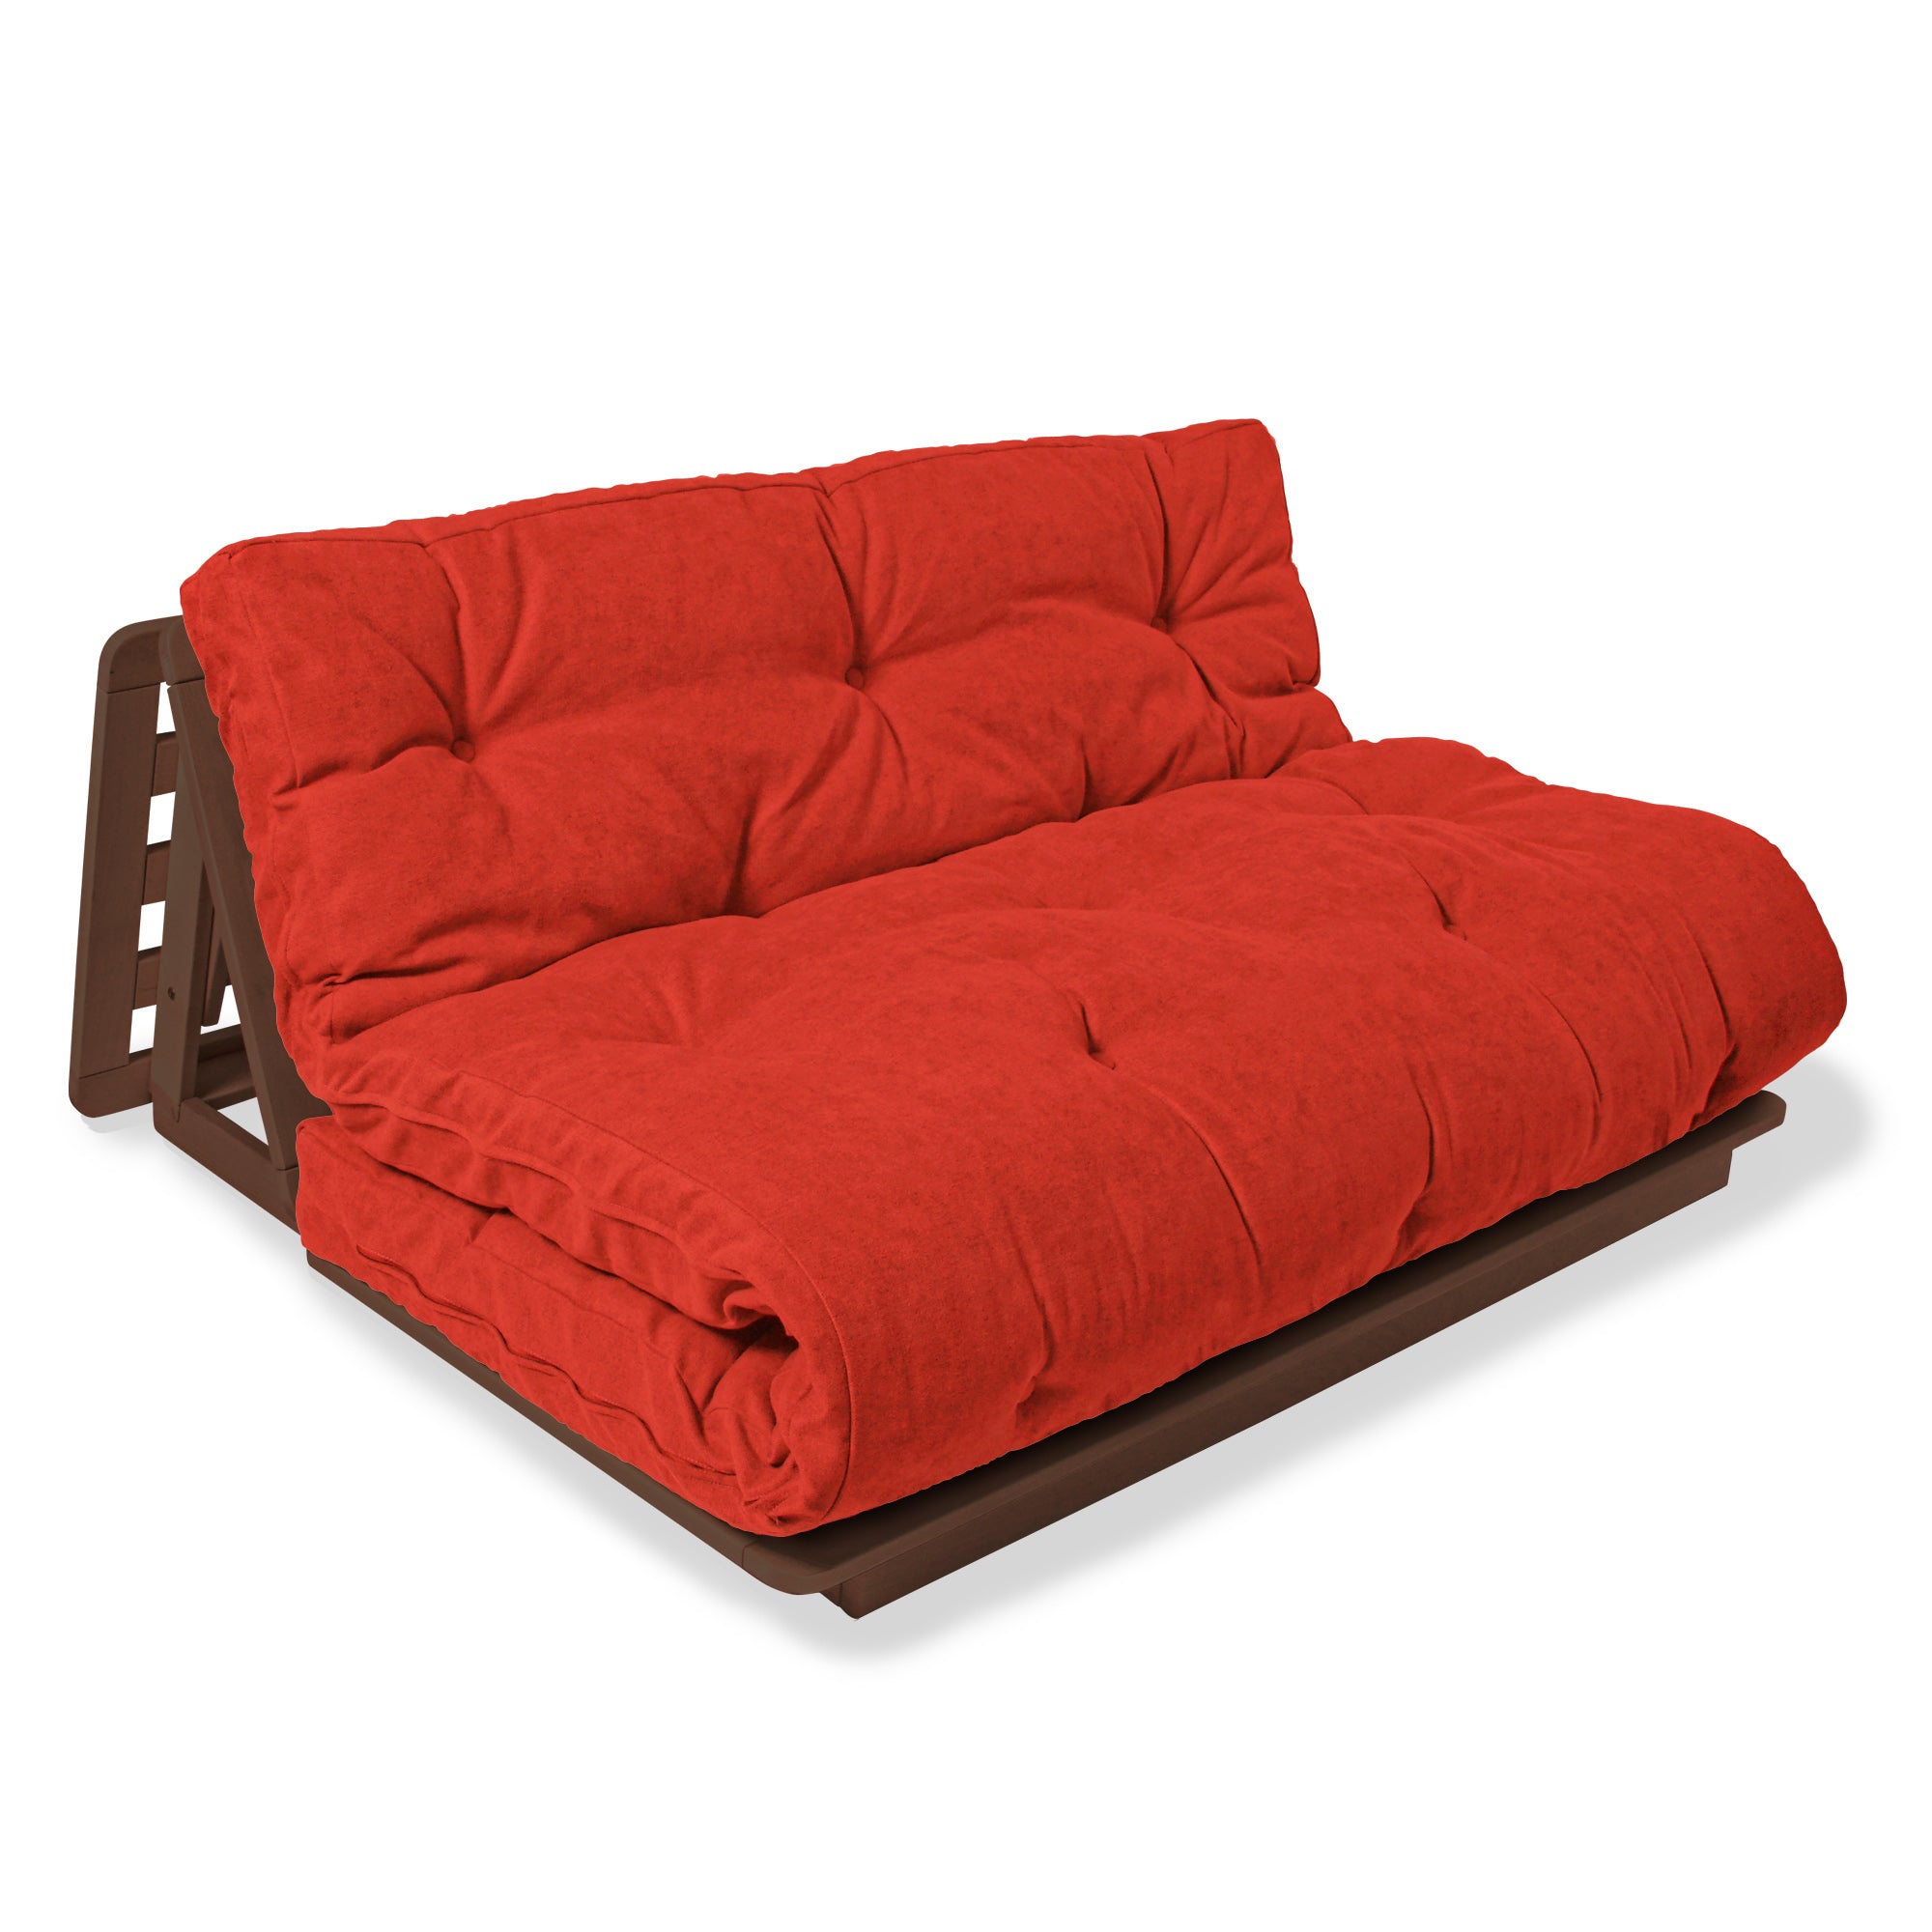 LAYTI-140 Futon Chair-walnut frame-red fabric